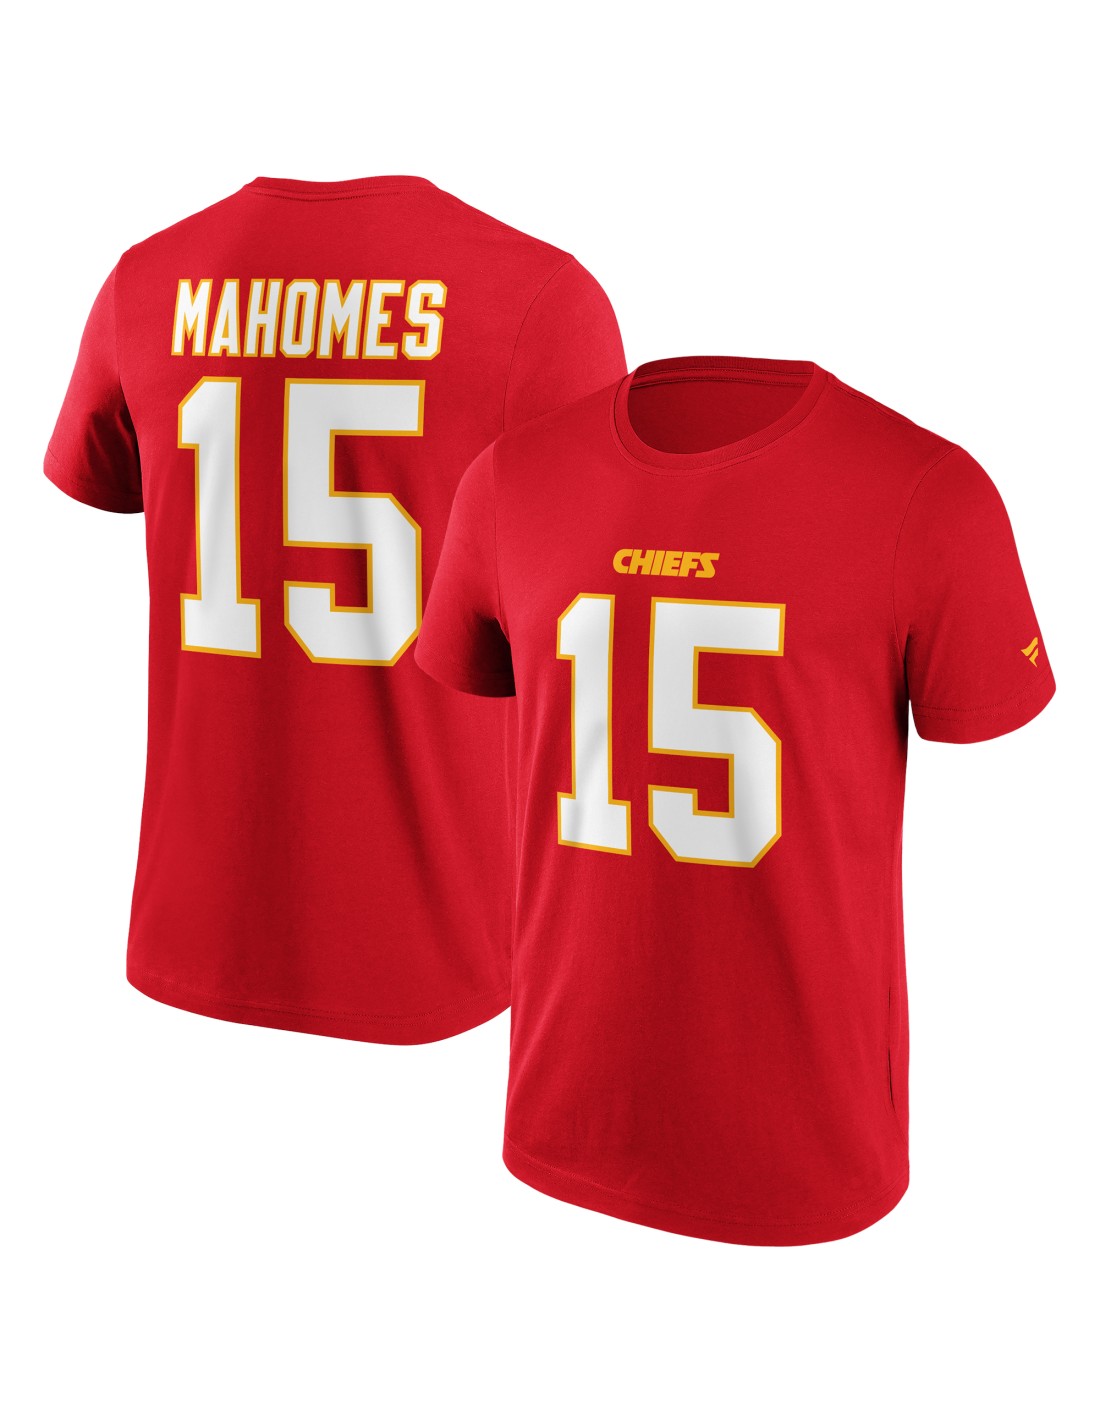 Kansas City Chiefs Graphic T-Shirt Mahomes 15